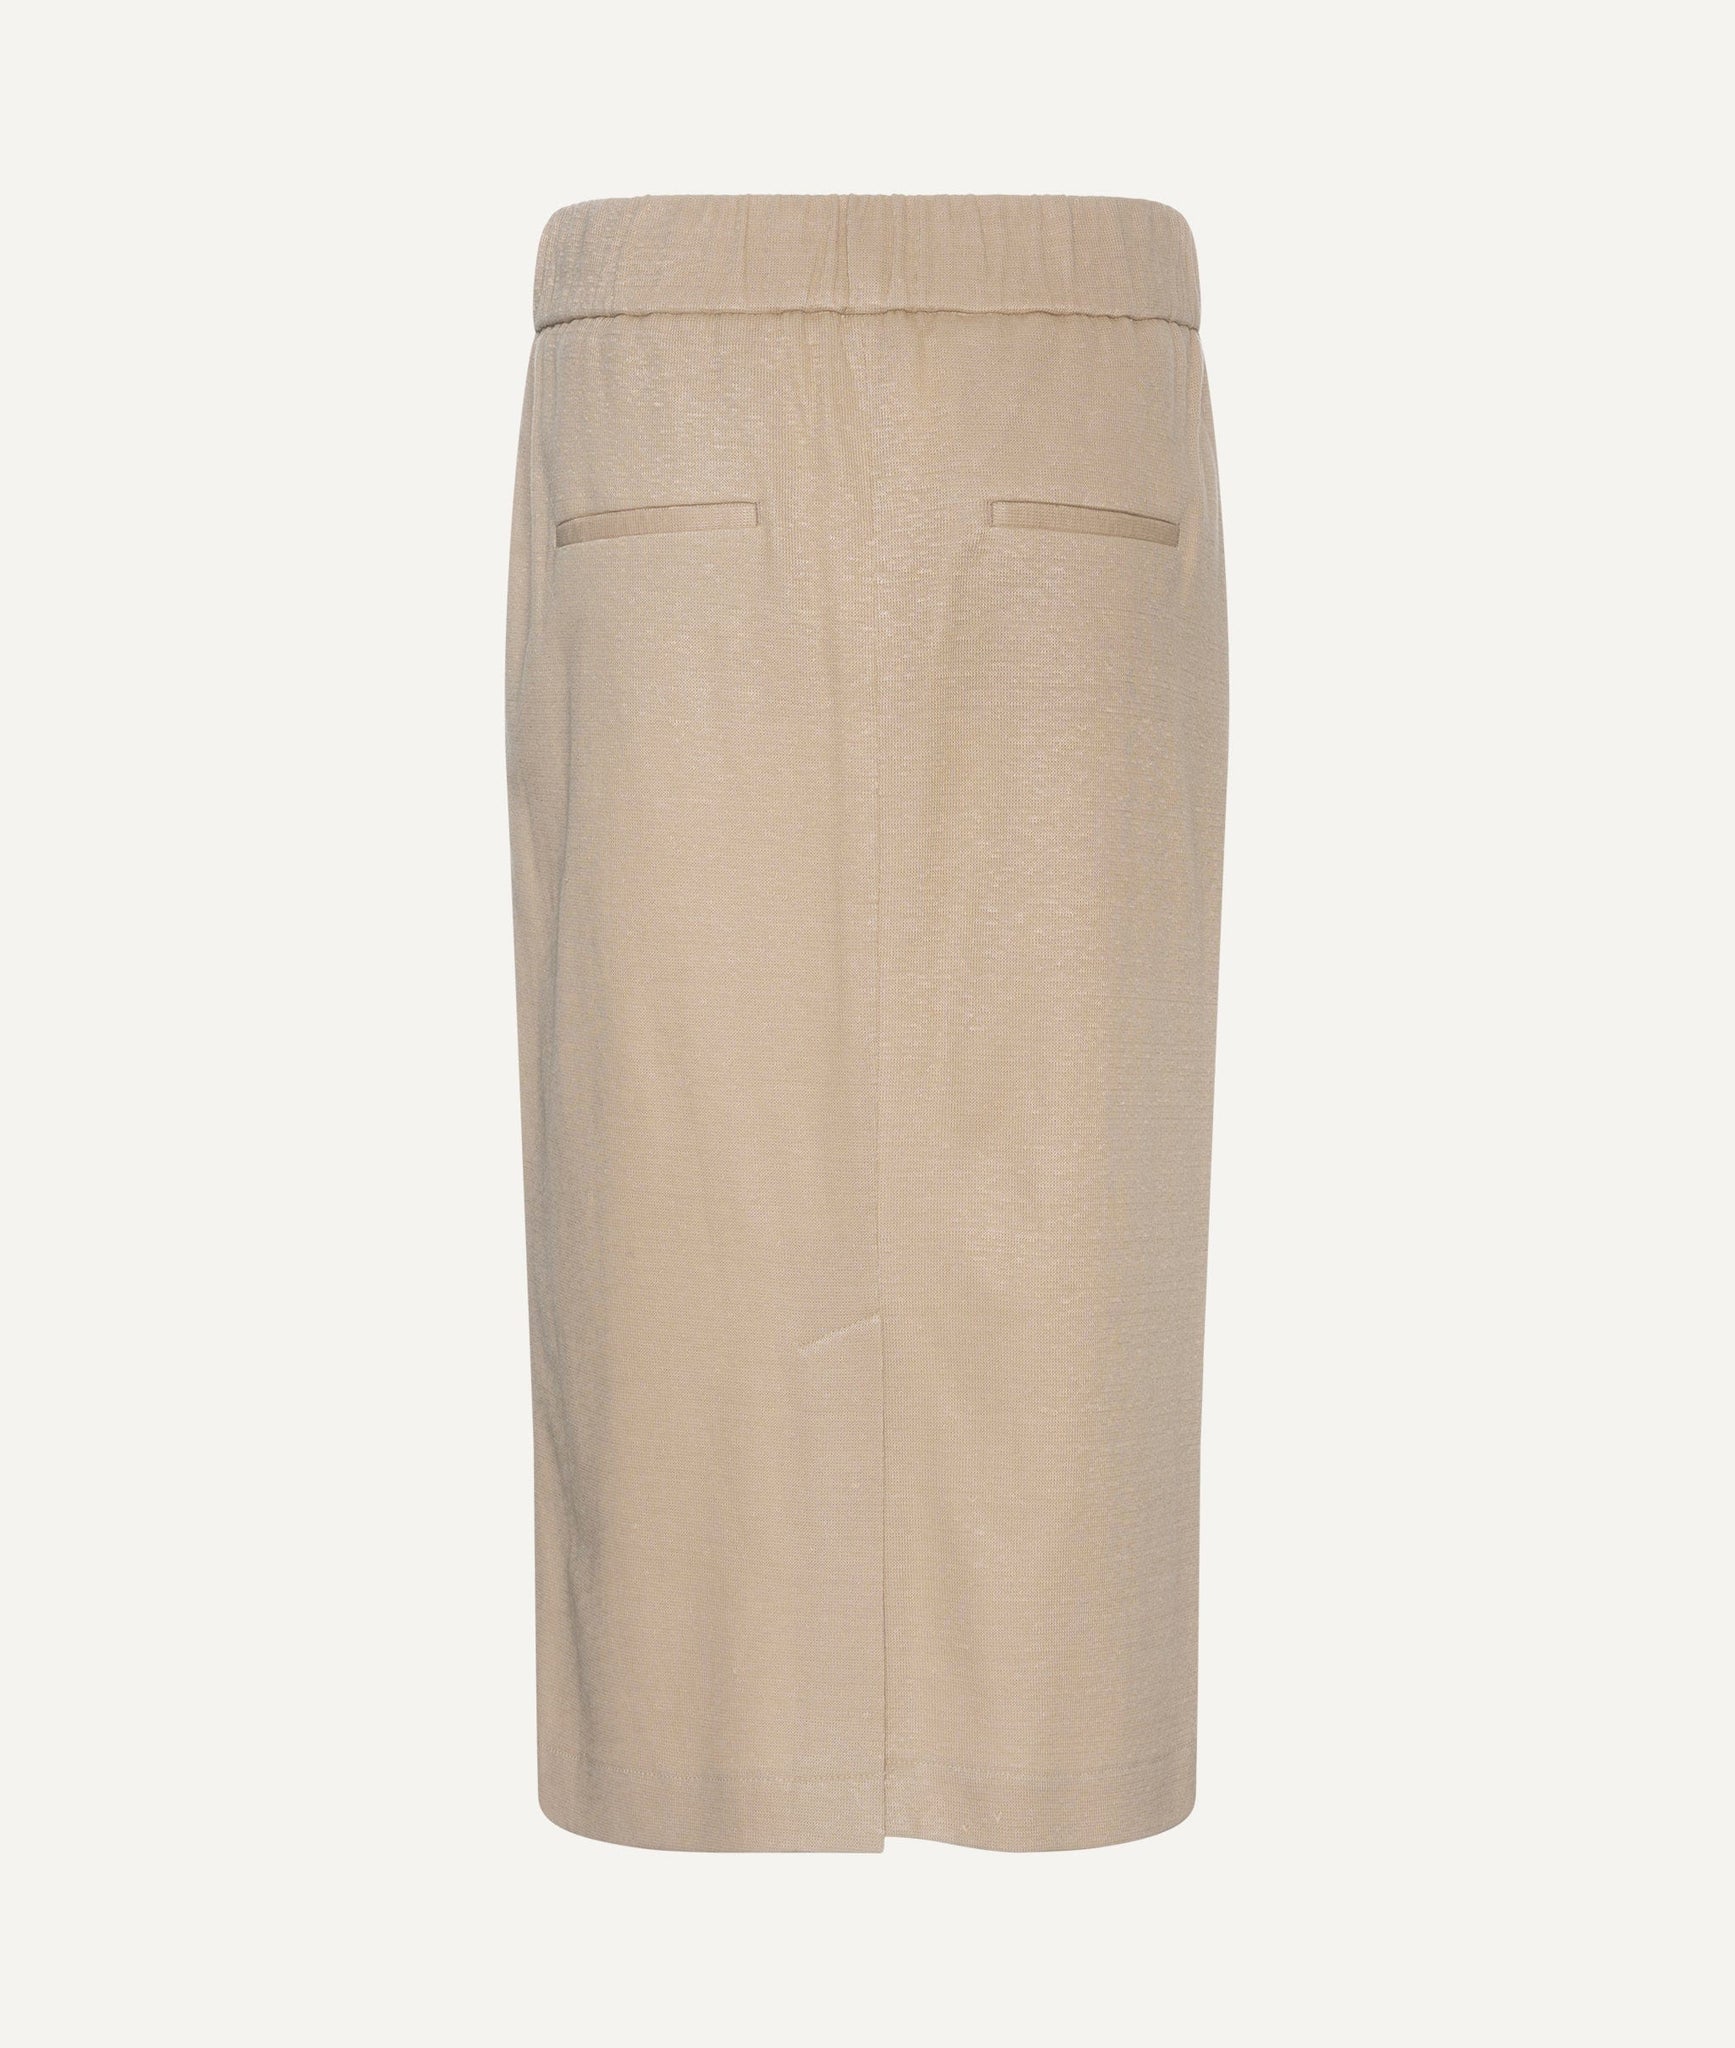 Peserico - Skirt in Cotton